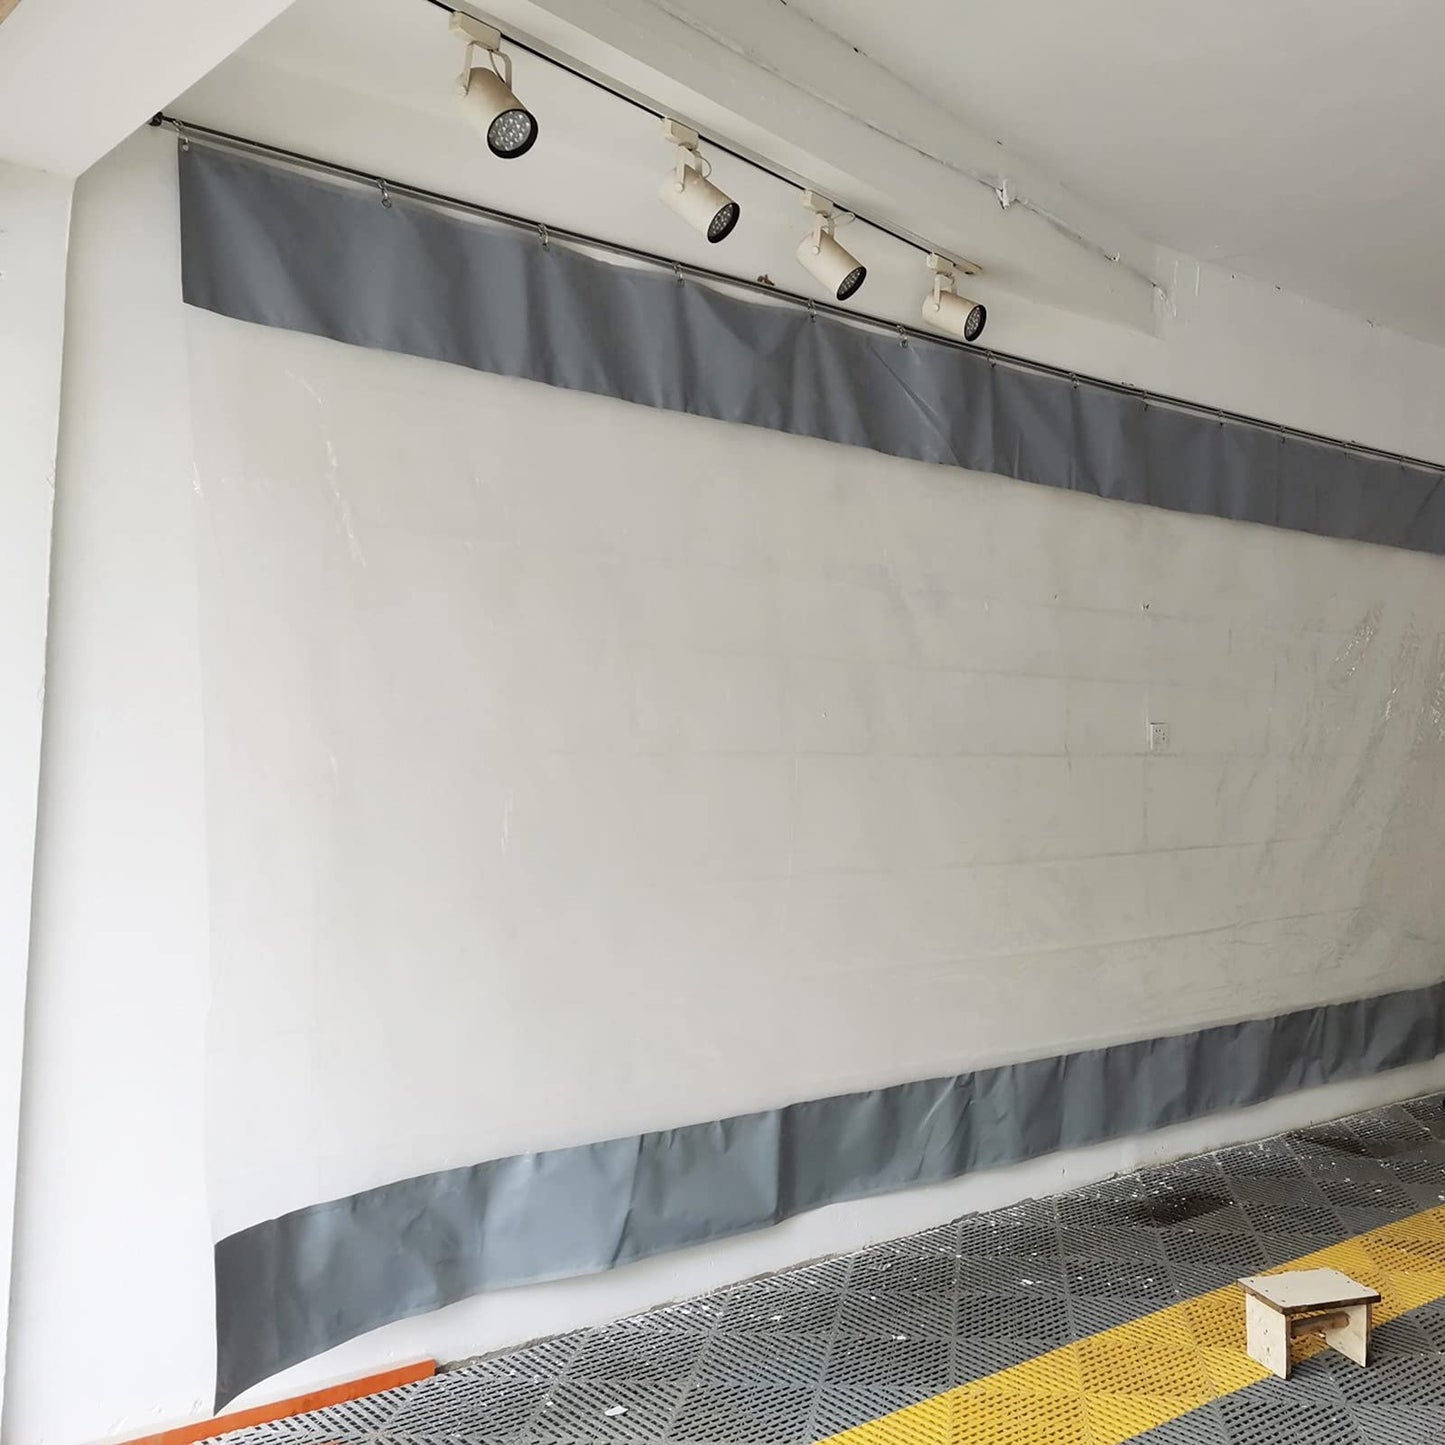 XFLOFE Exterior Cortina Lona, Transparente PVC Paneles Laterales Impermeable con Ojales Y Bolas Elásticas para Pérgola, Porche, Gazebos (Color : Gray, Size : 3x2.2m/9.8x7.2ft)